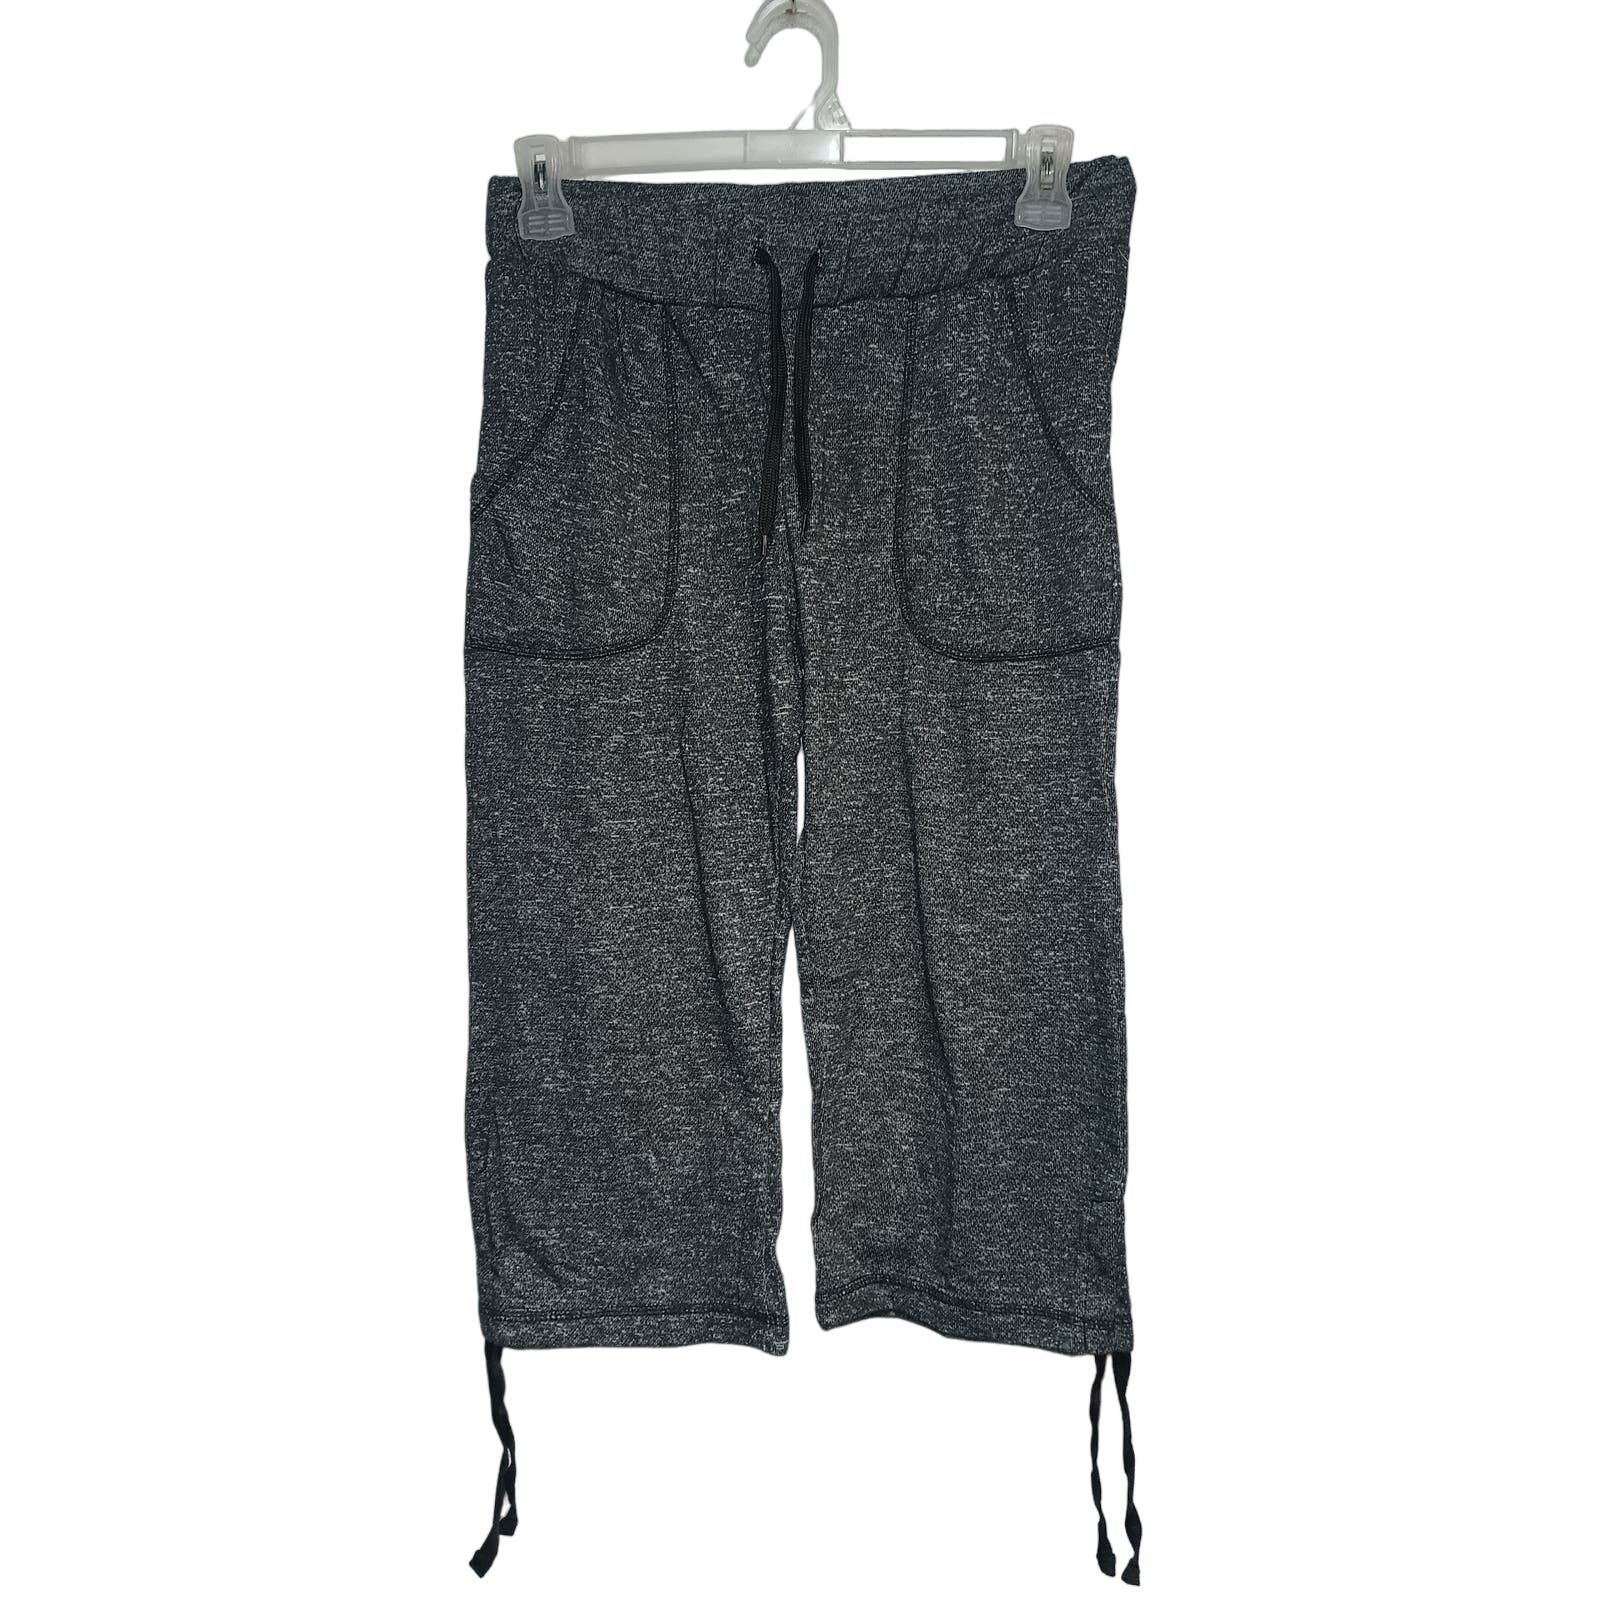 Authentic Bobbie Brooks Women´s Sweatpants Size Medium hKXinJDG6 Wholesale